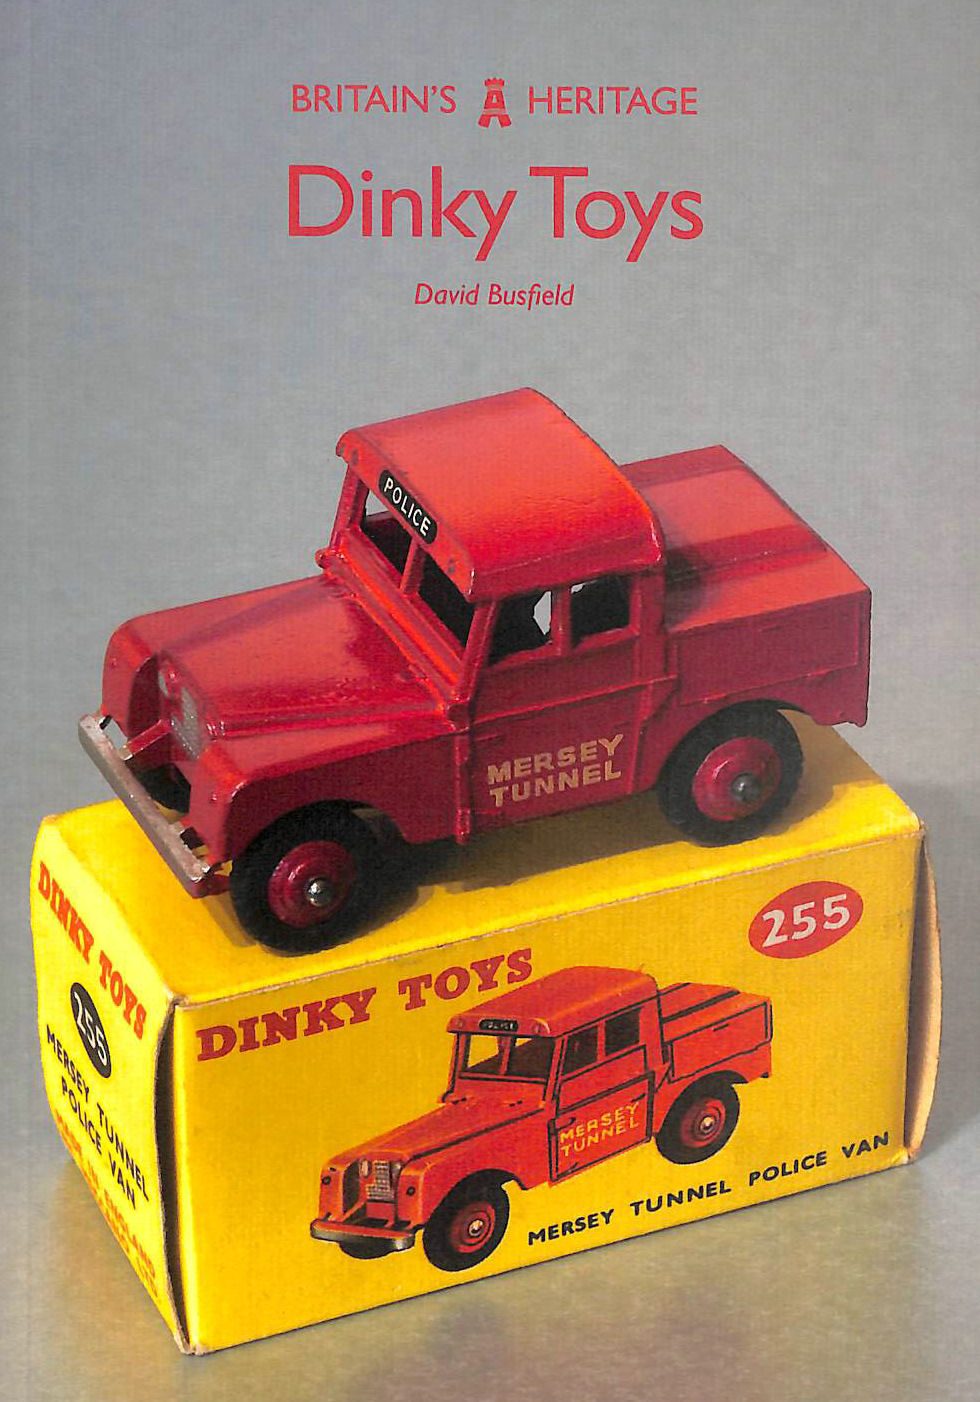  - Dinky Toys (Britain's Heritage)